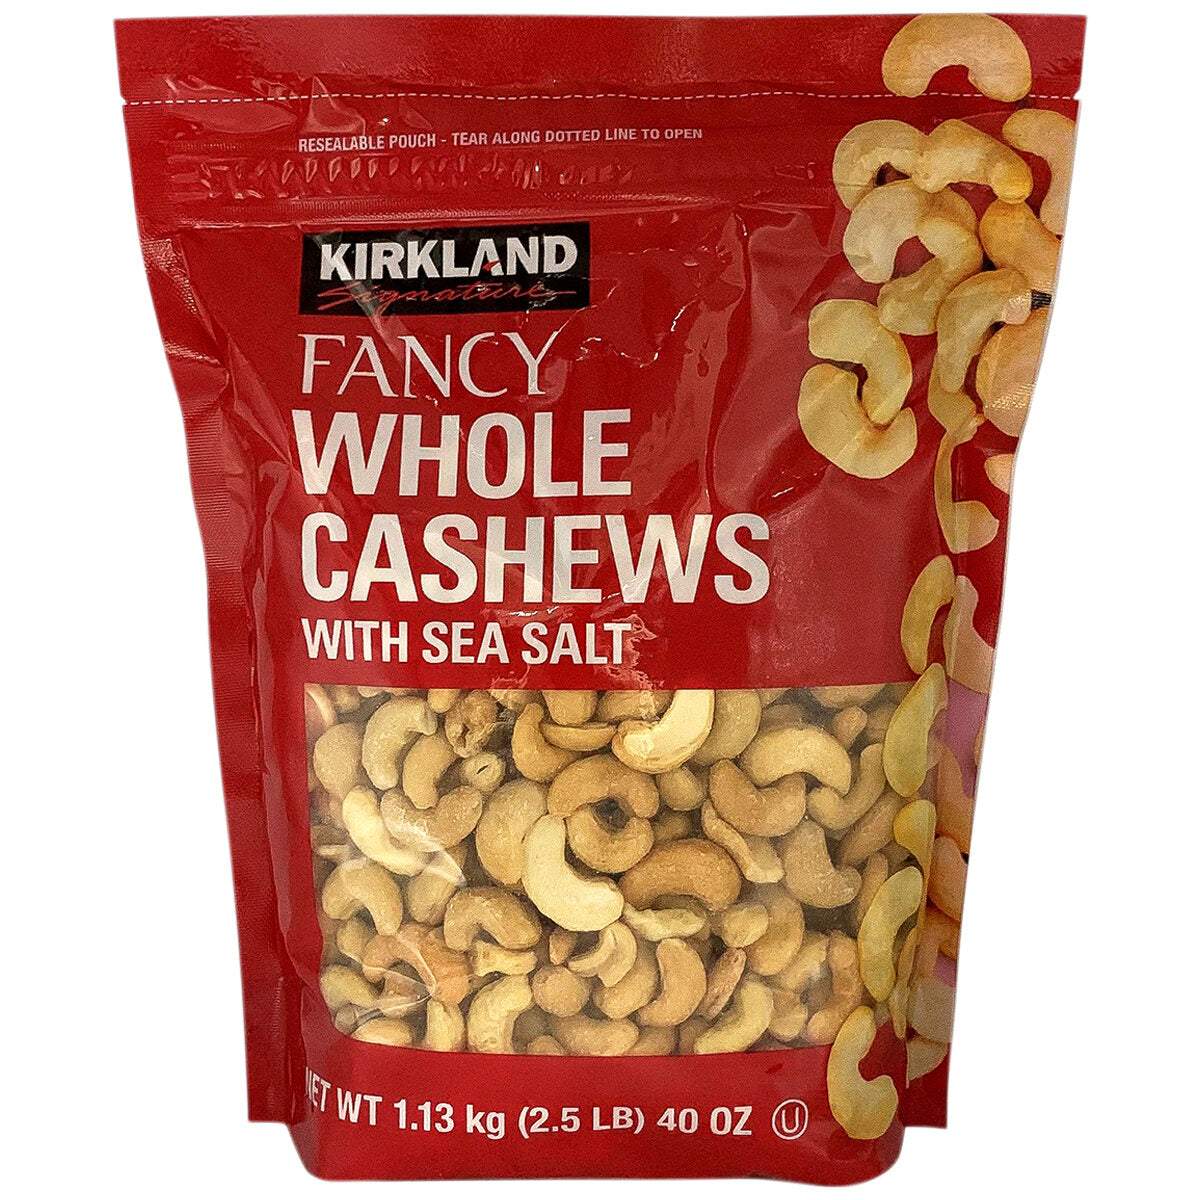 Kirkland Signature Unsalted Mixed Nuts 1.13 kg